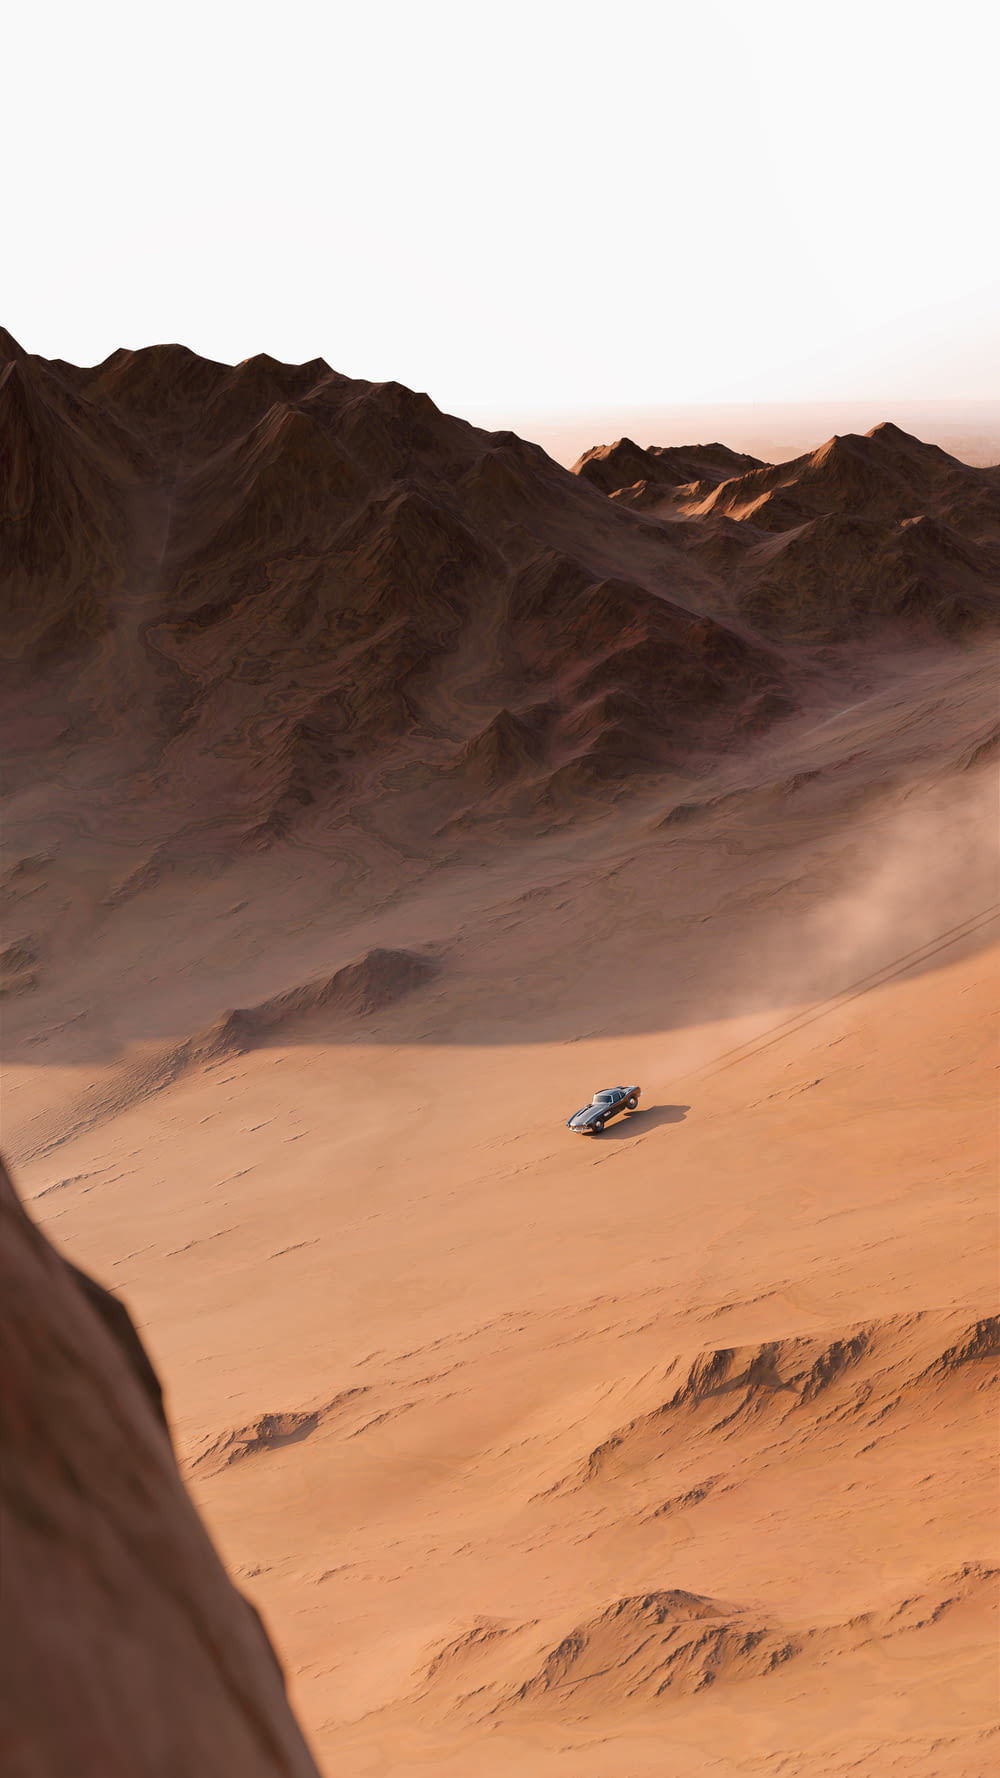 a car is driving through the desert